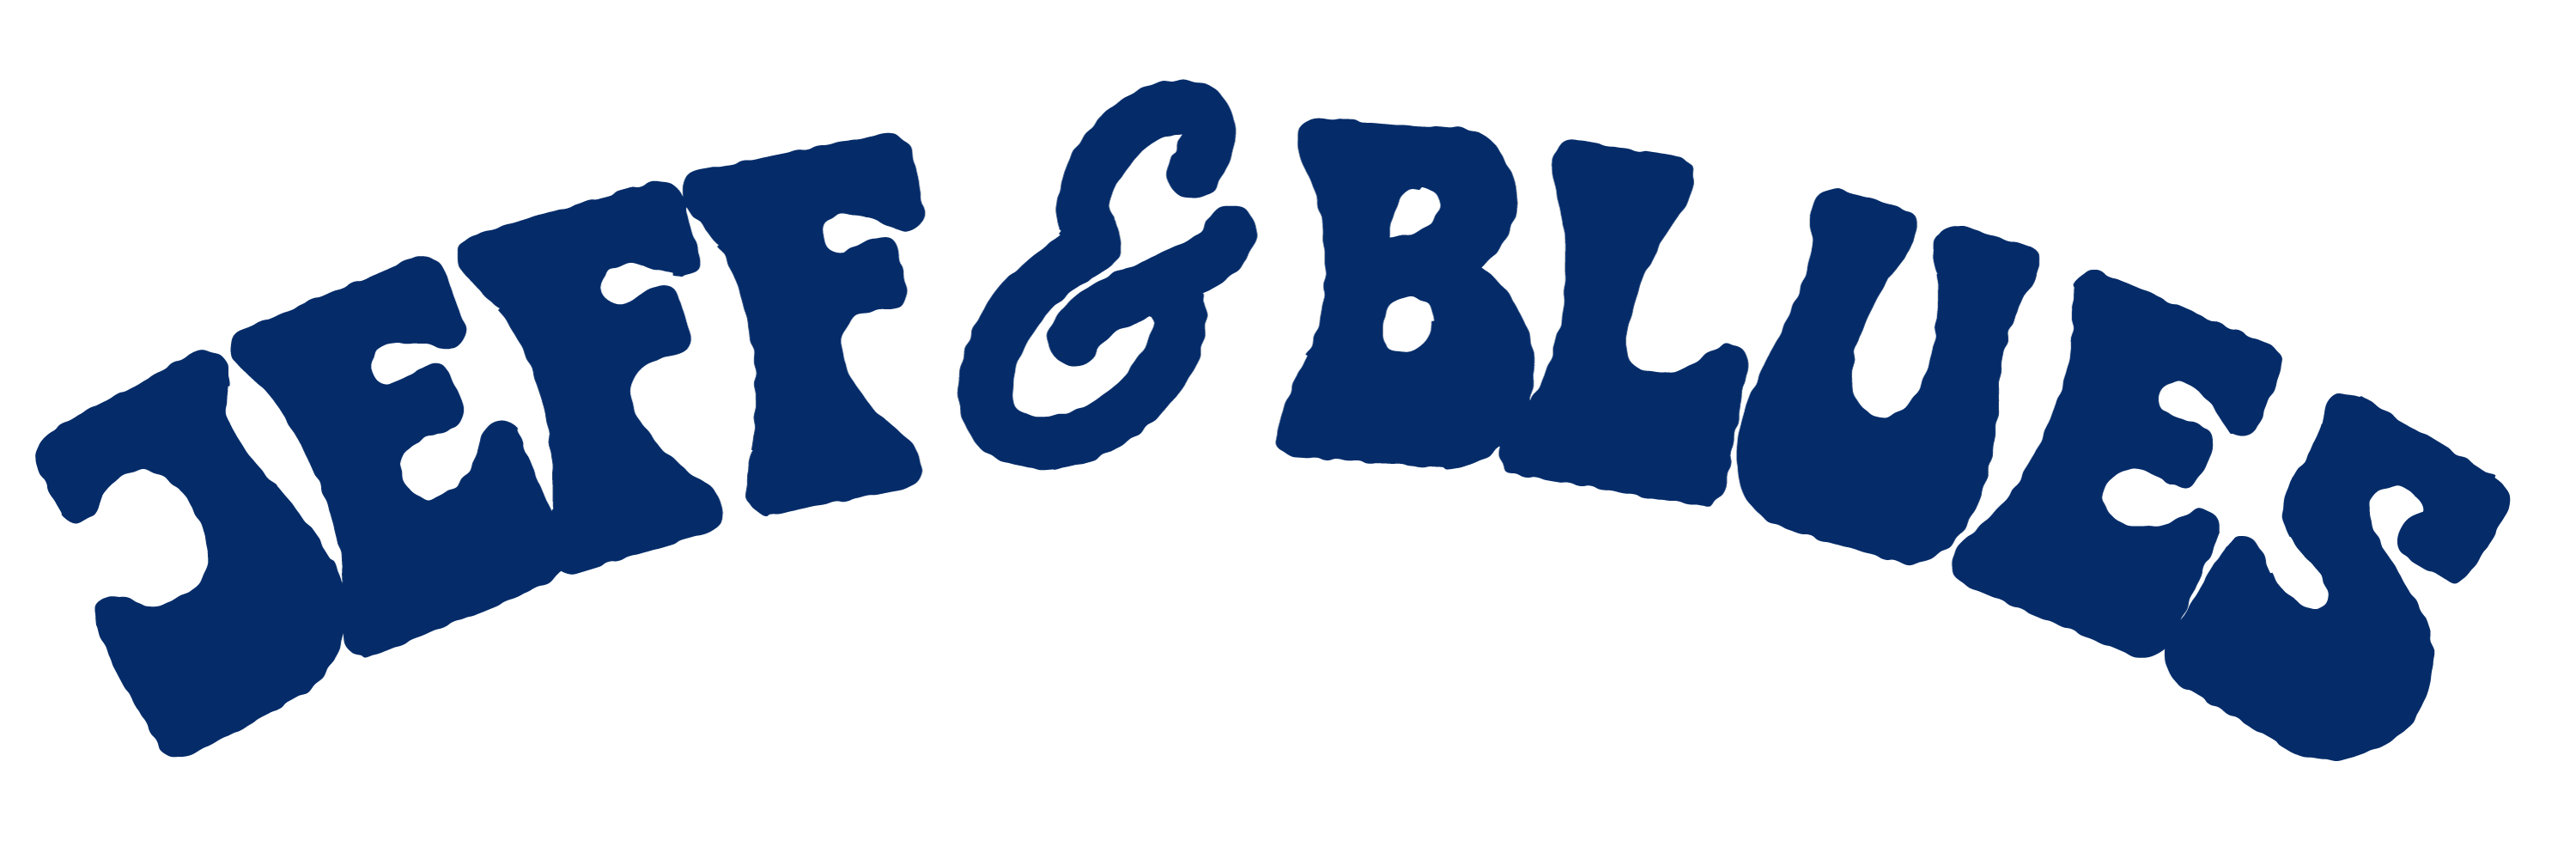 jeffnblues logo